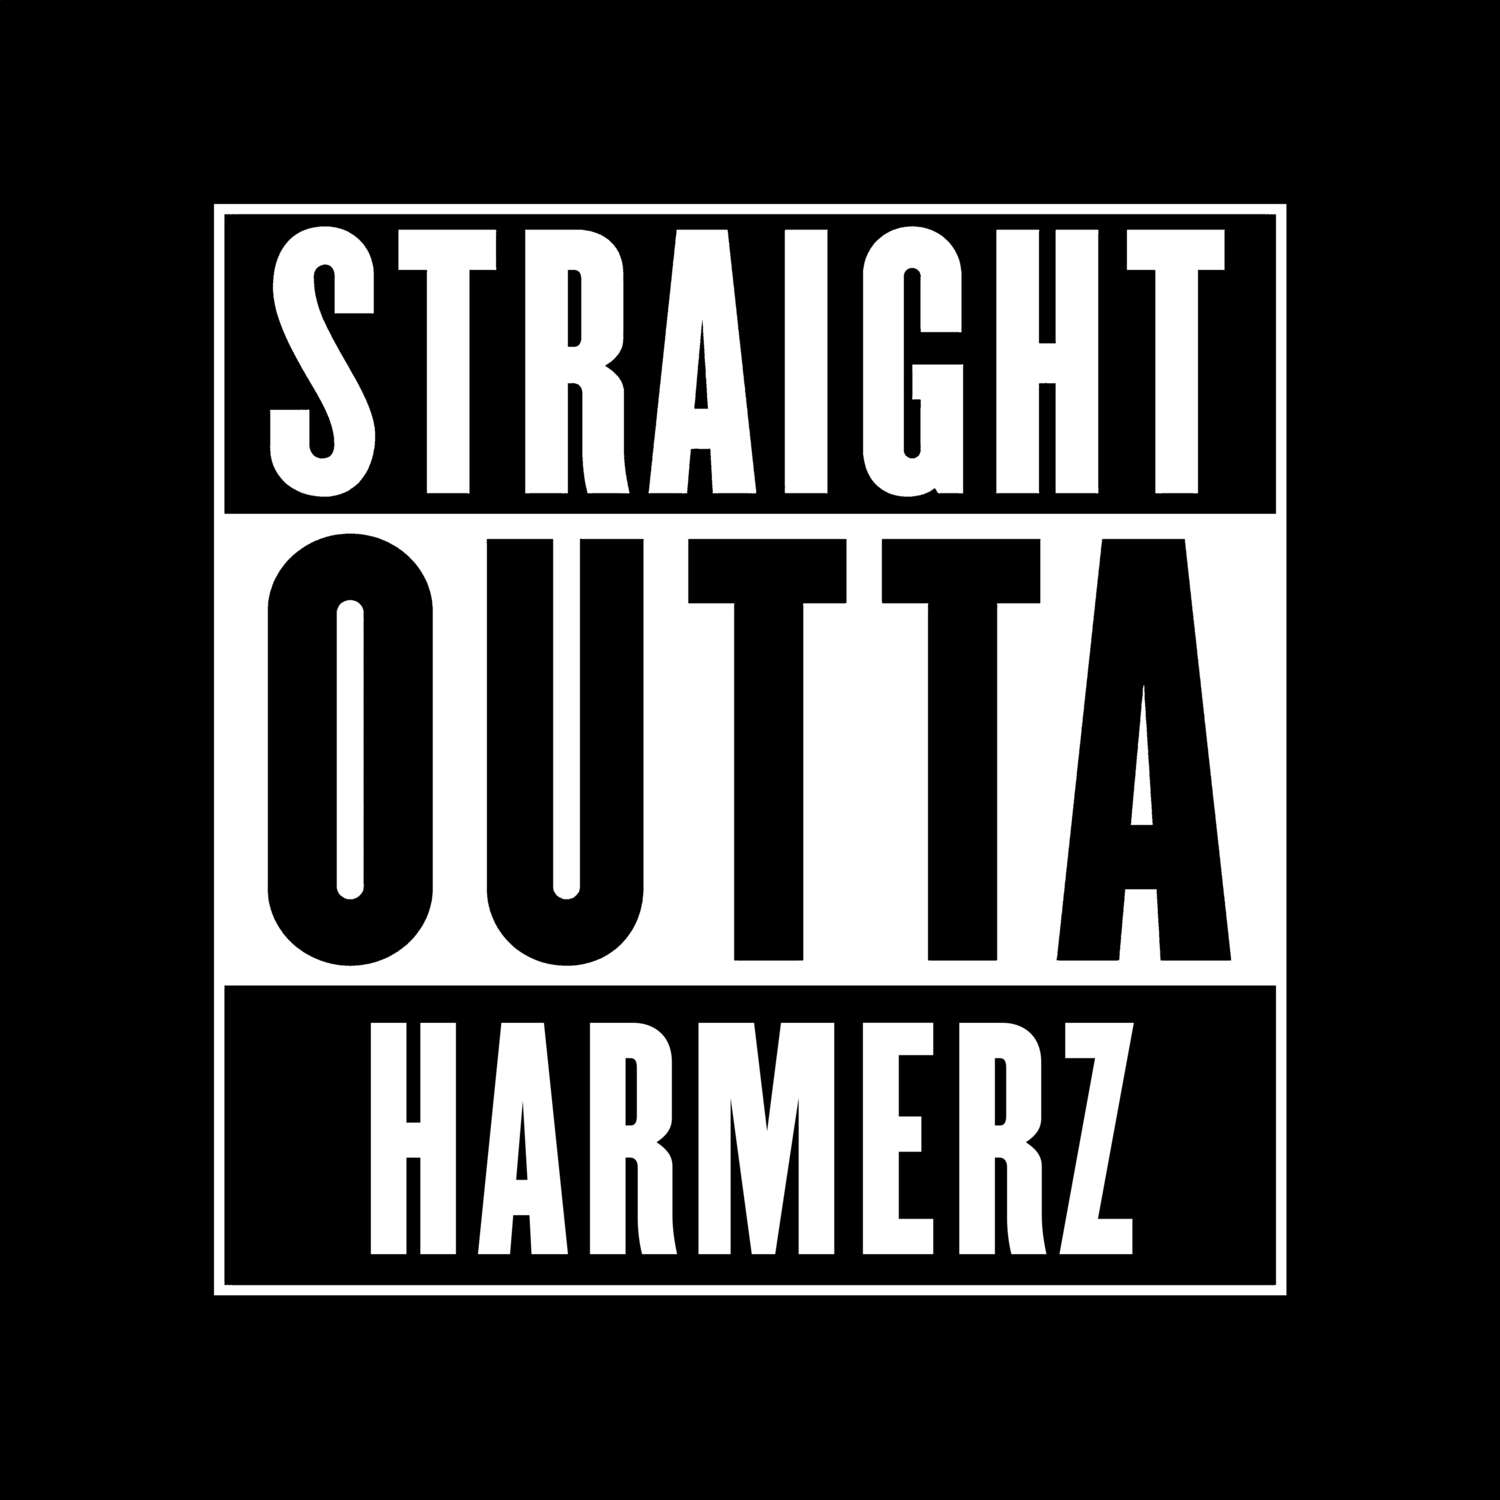 Harmerz T-Shirt »Straight Outta«